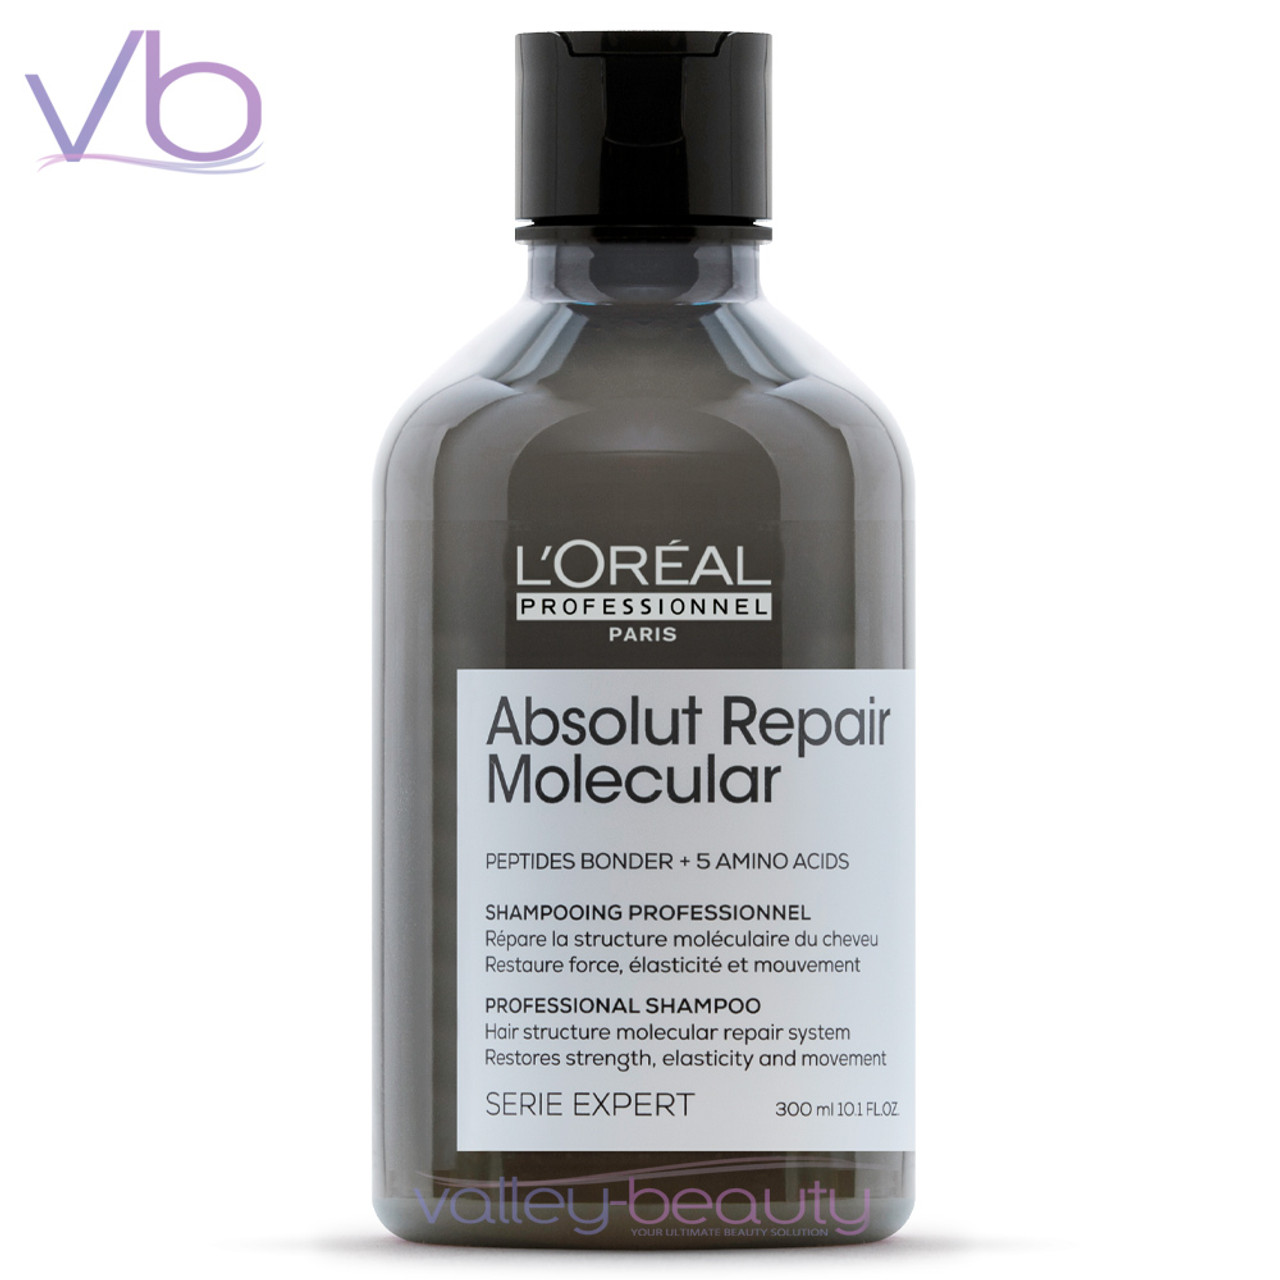 L'Oreal L’Oreal Absolut Repair Molecular Shampoo | Sulfate-Free Hair Structure Repair System, 10.1 fl.oz.